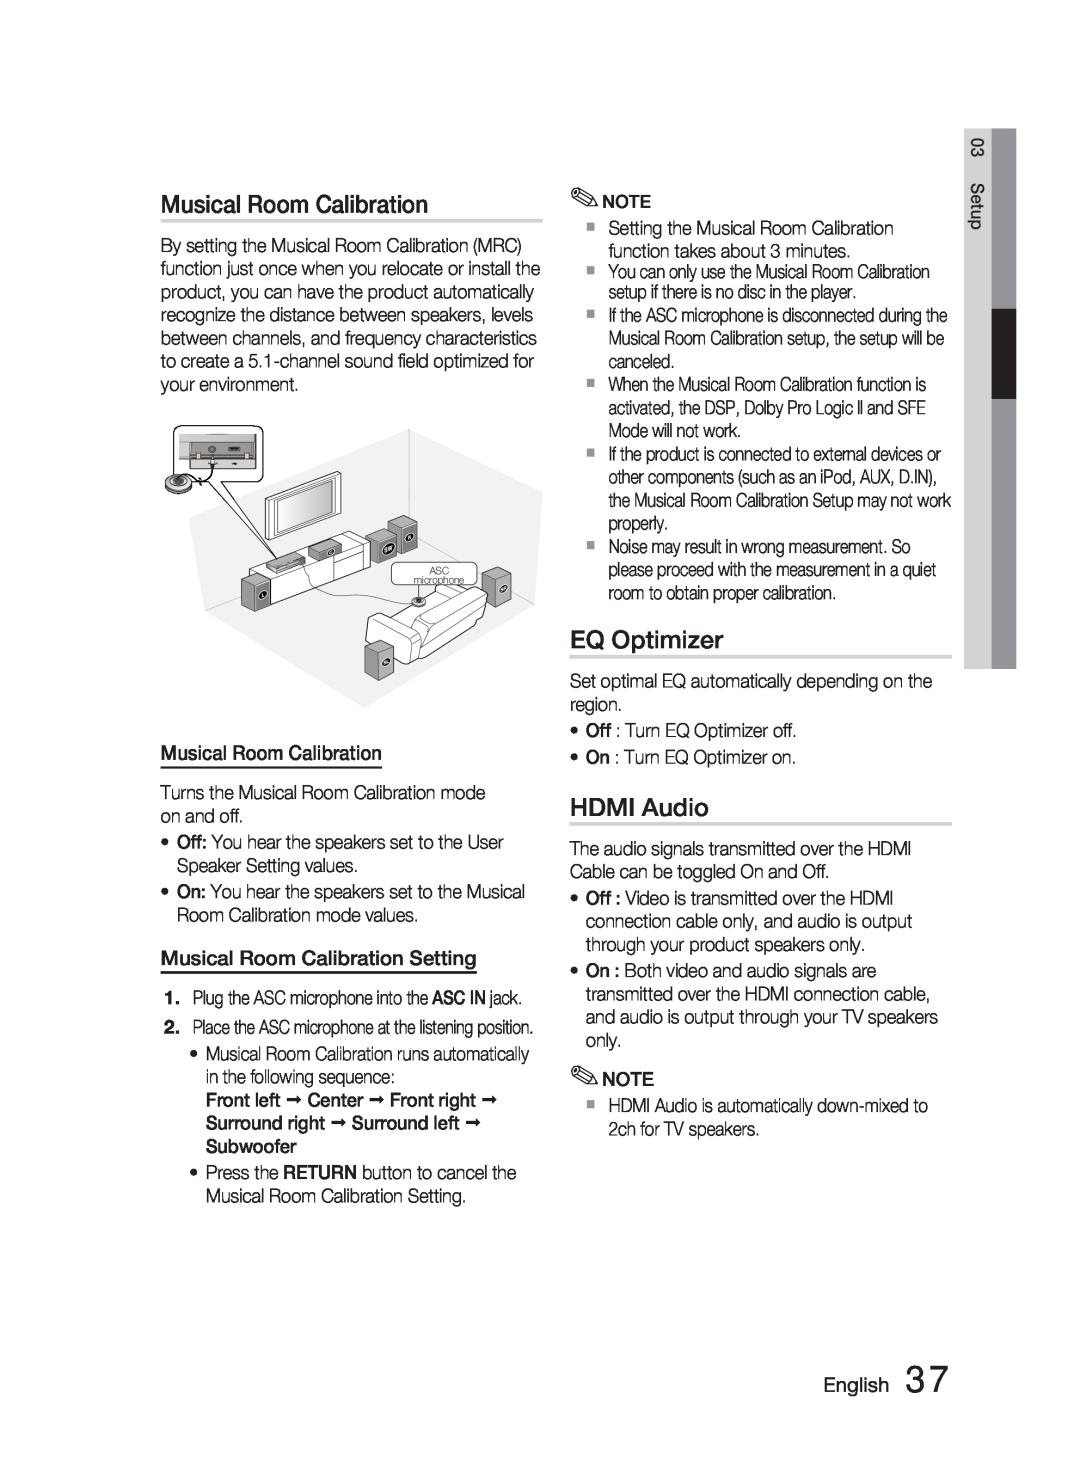 Samsung HT-C6900W user manual EQ Optimizer, HDMI Audio, Musical Room Calibration Setting, English 